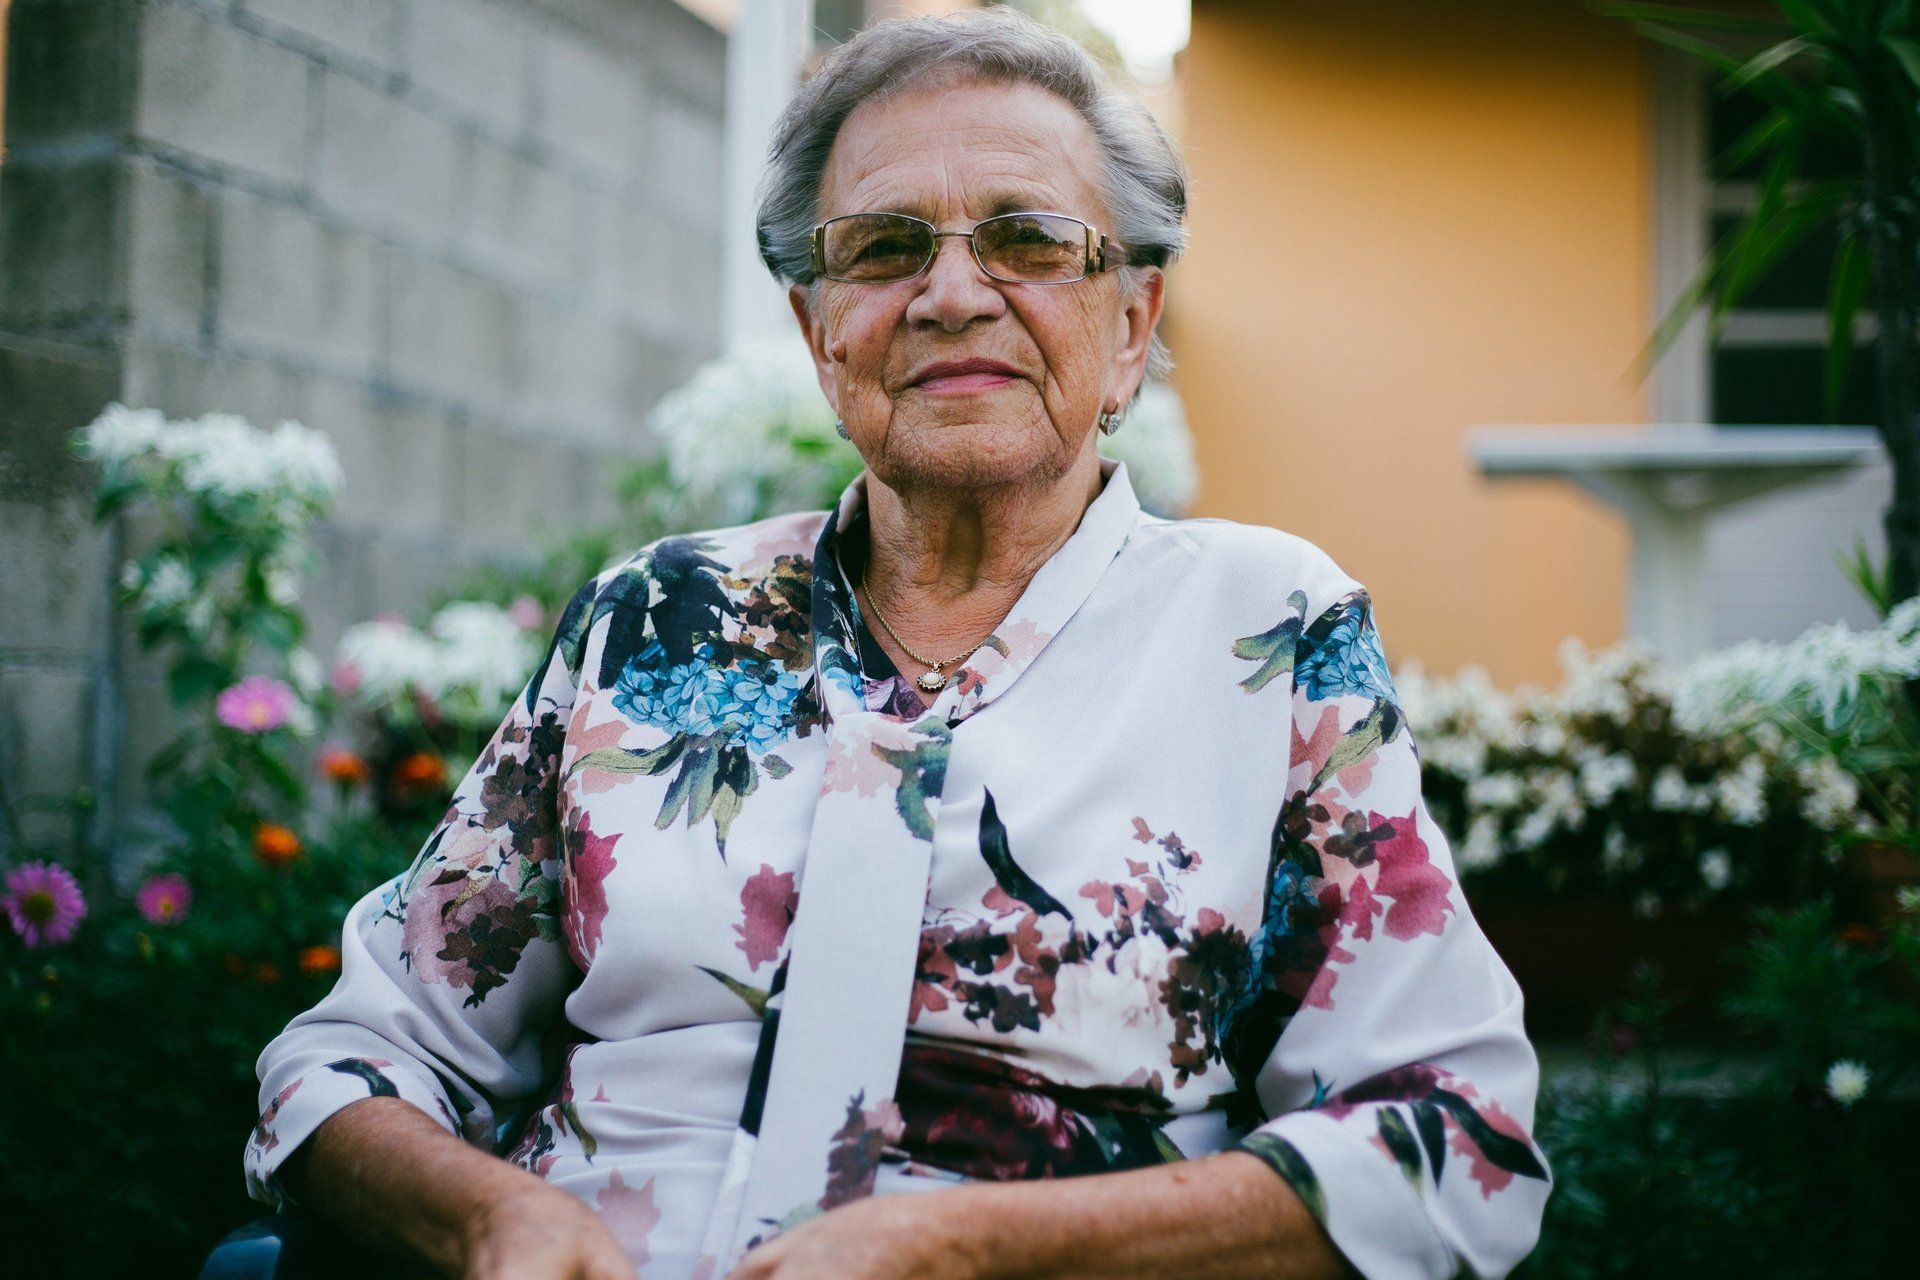 Senior citizen in a retirement home